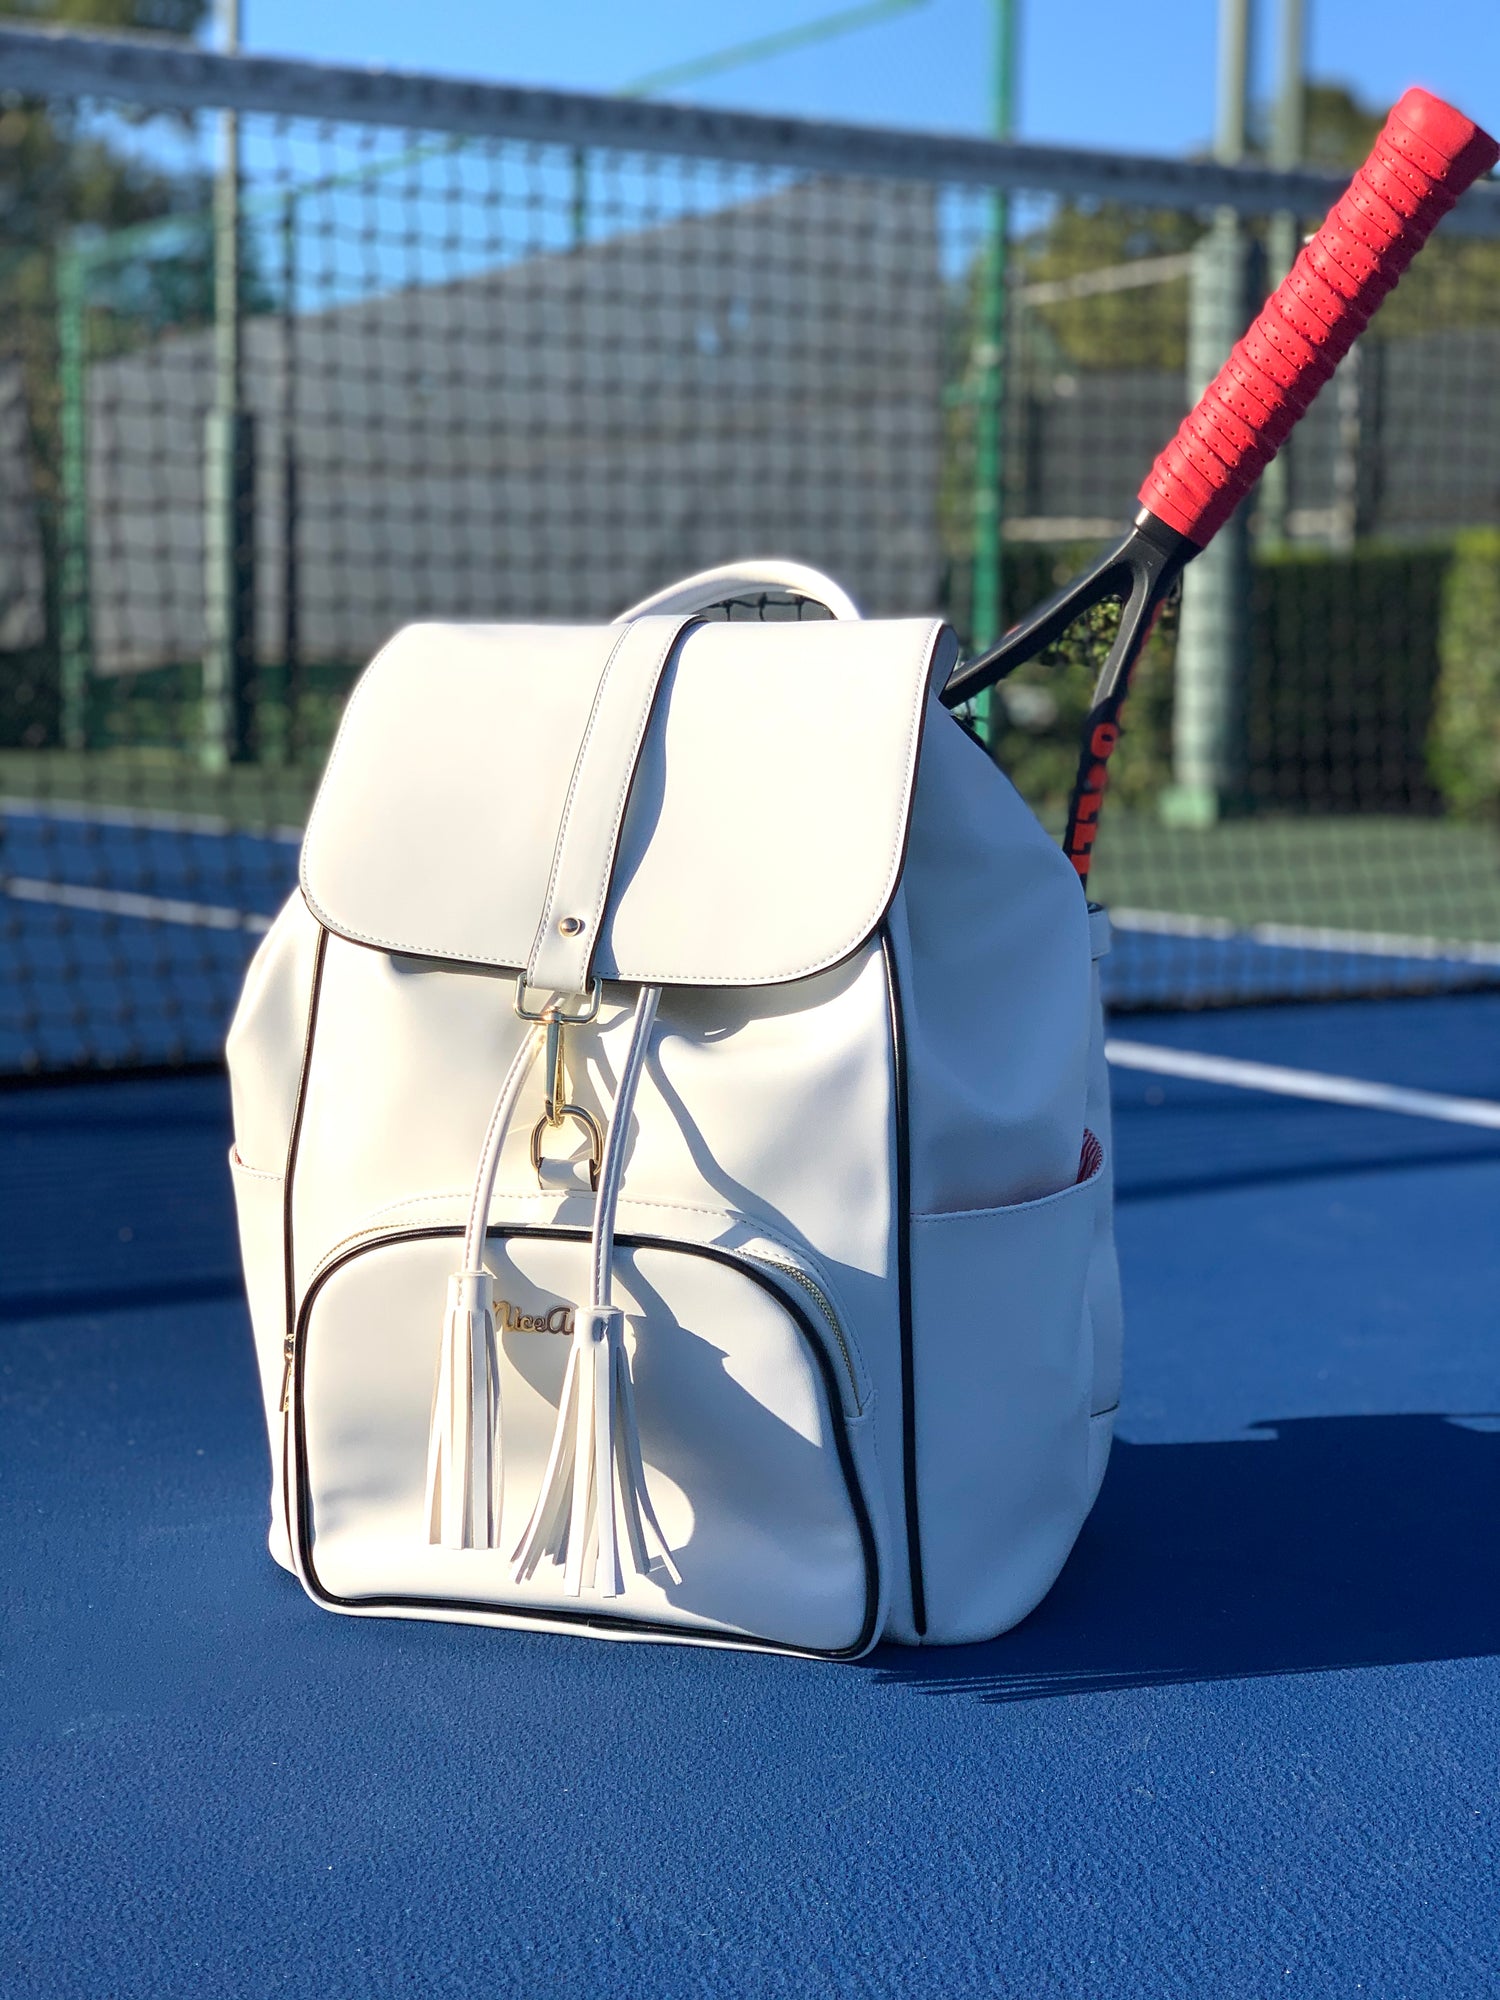 White Tennis Bag